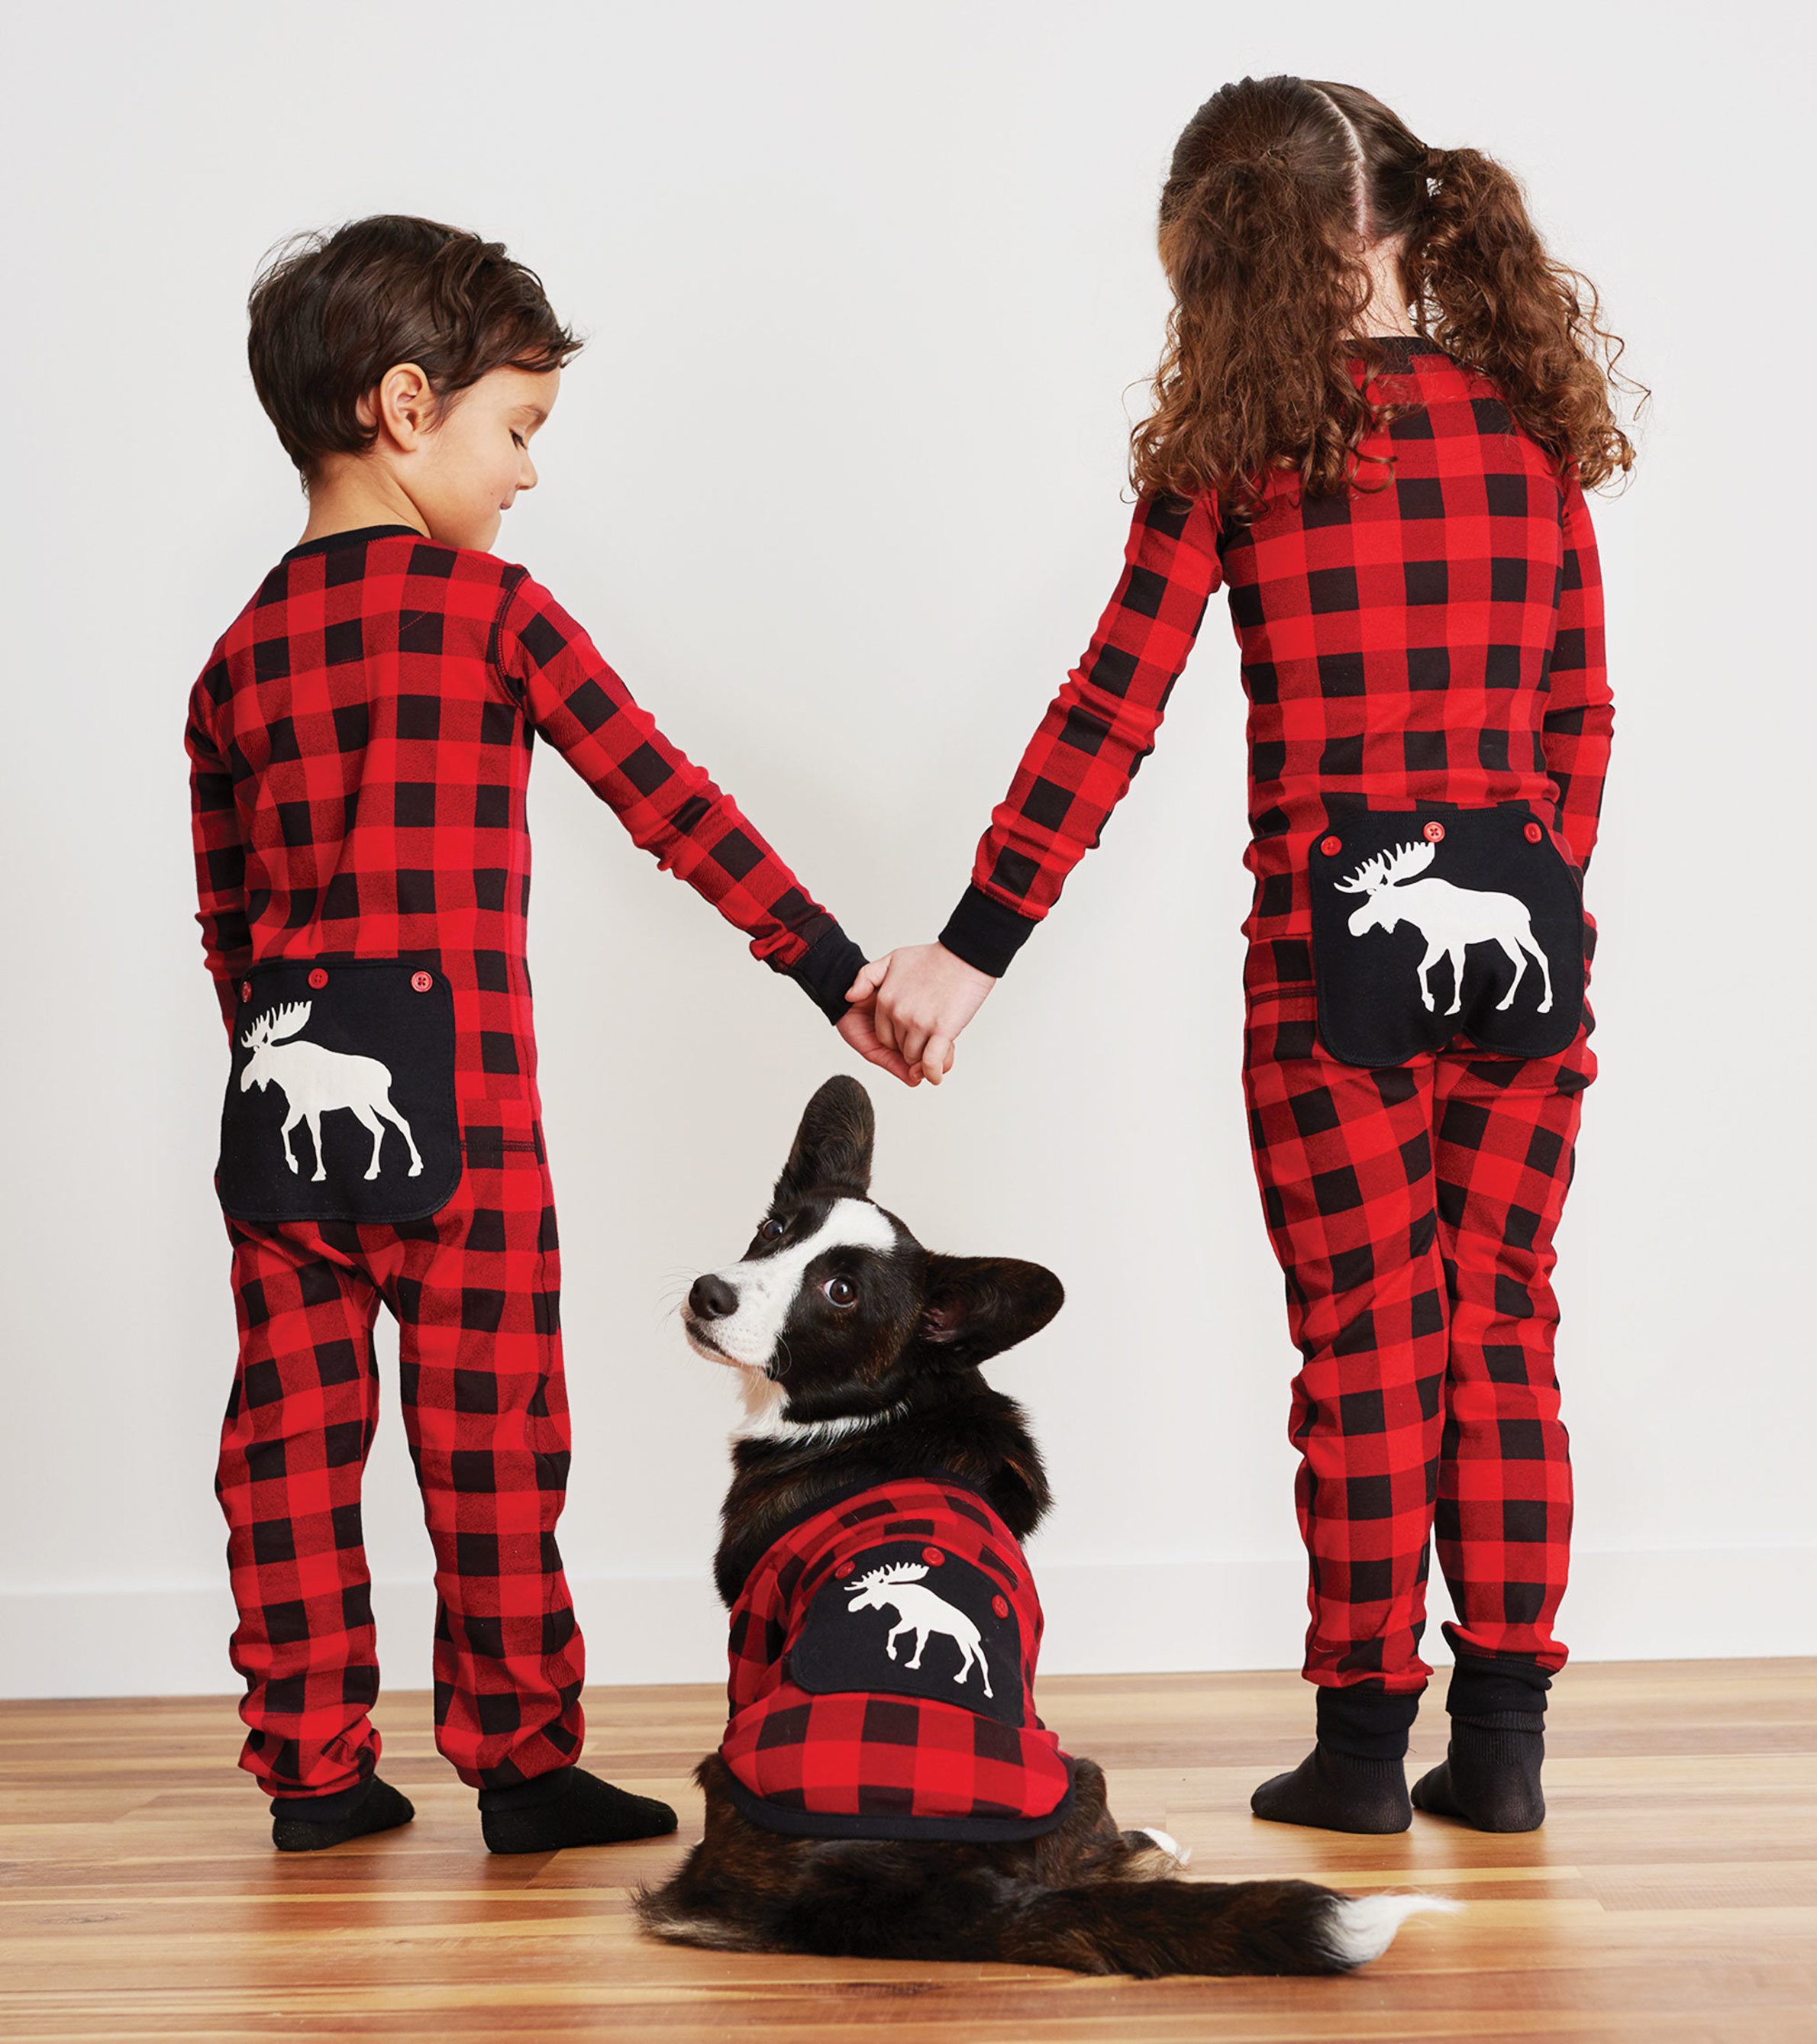 Unisex Adult Matching Family Thermal Buffalo Plaid Cotton Pajamas